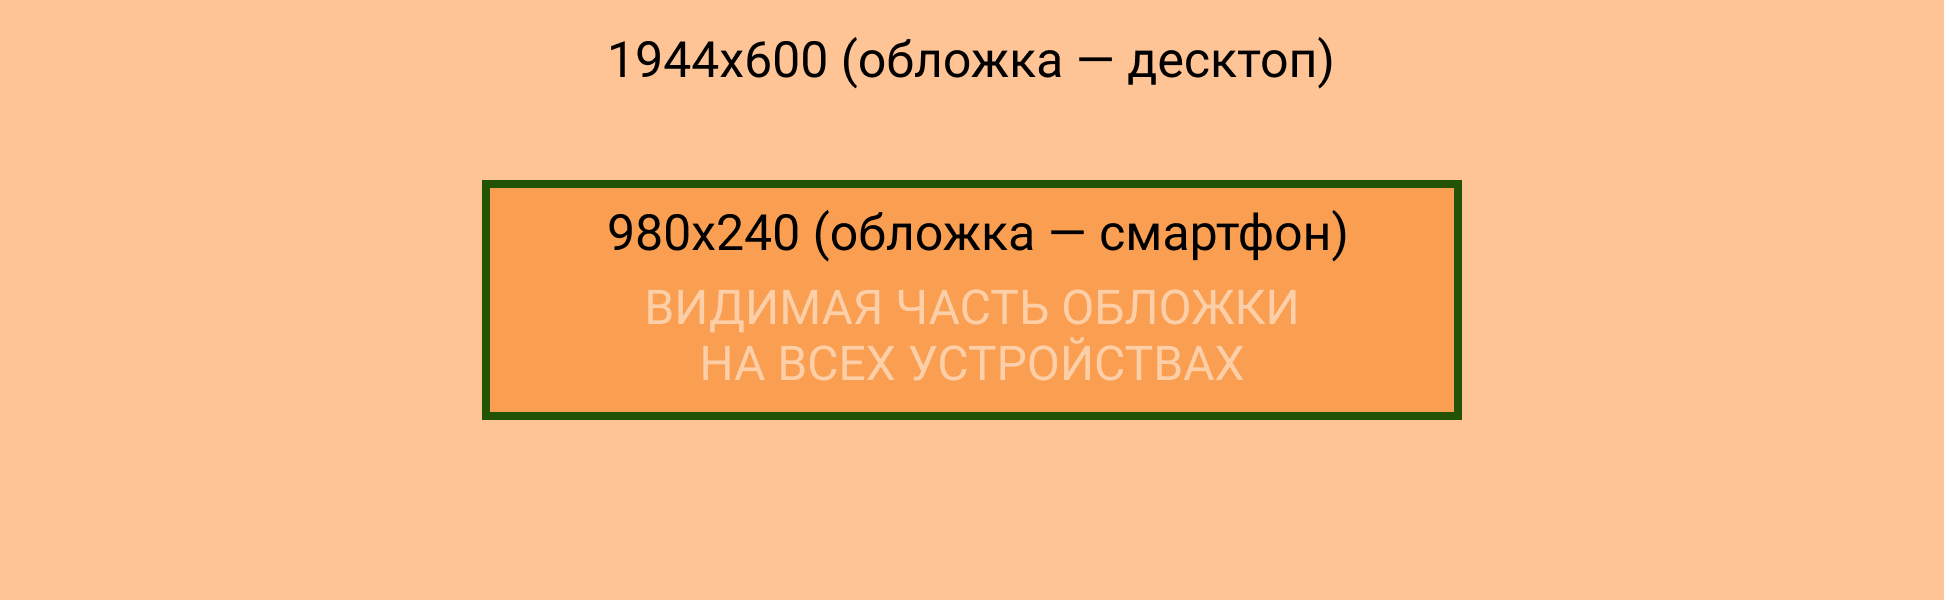 Размер обложки в Одноклассники, шаблон online-media